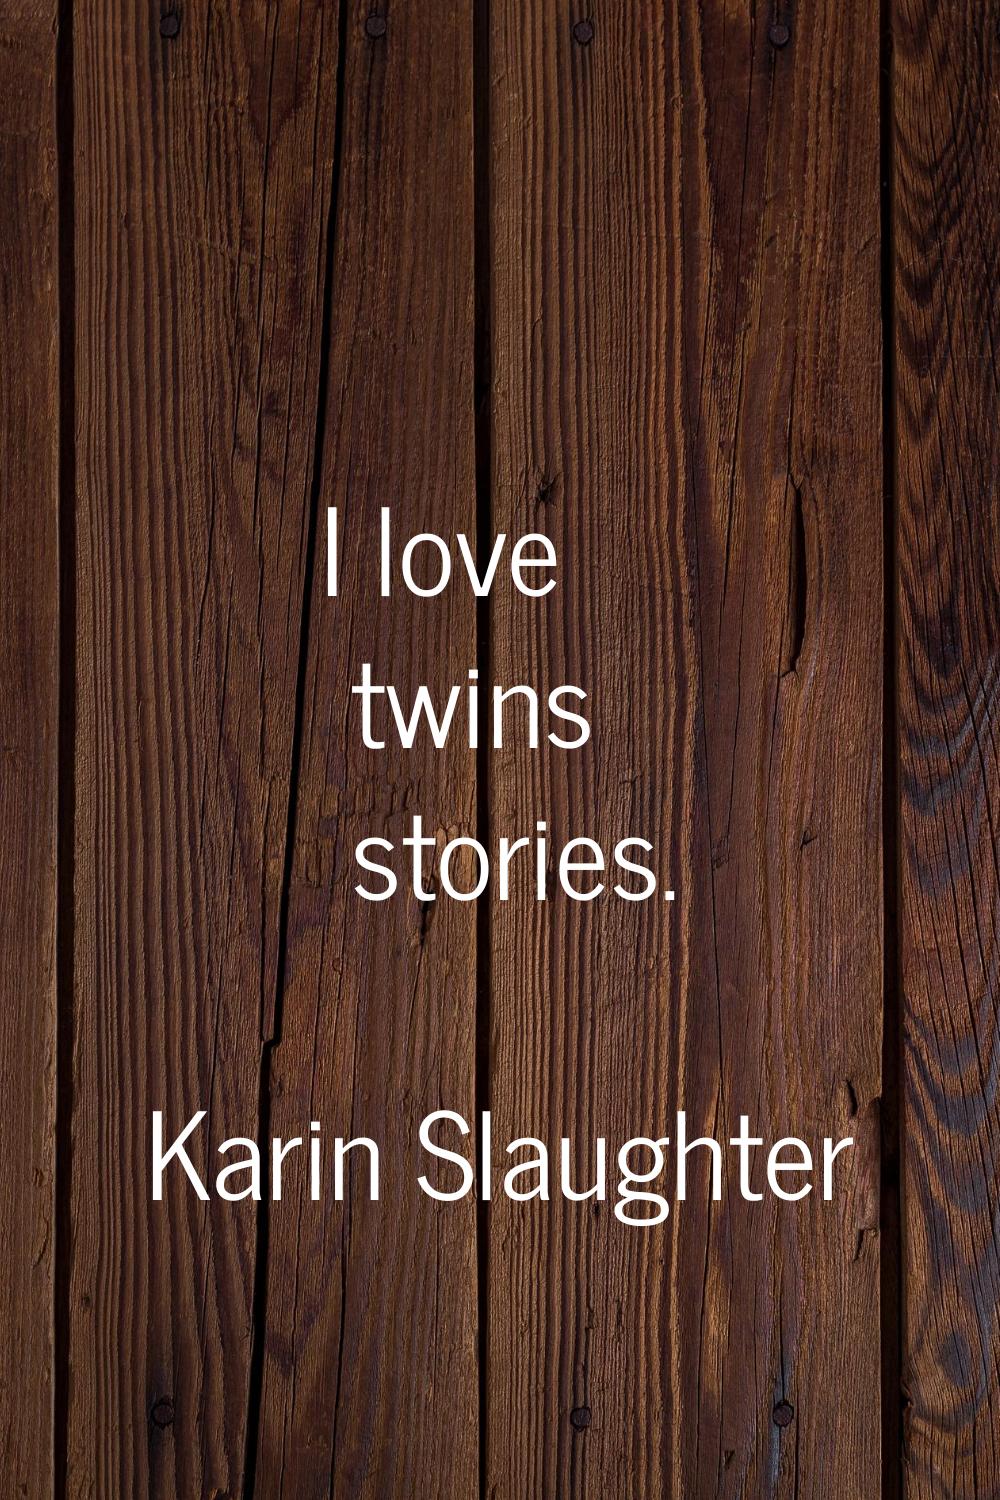 I love twins stories.